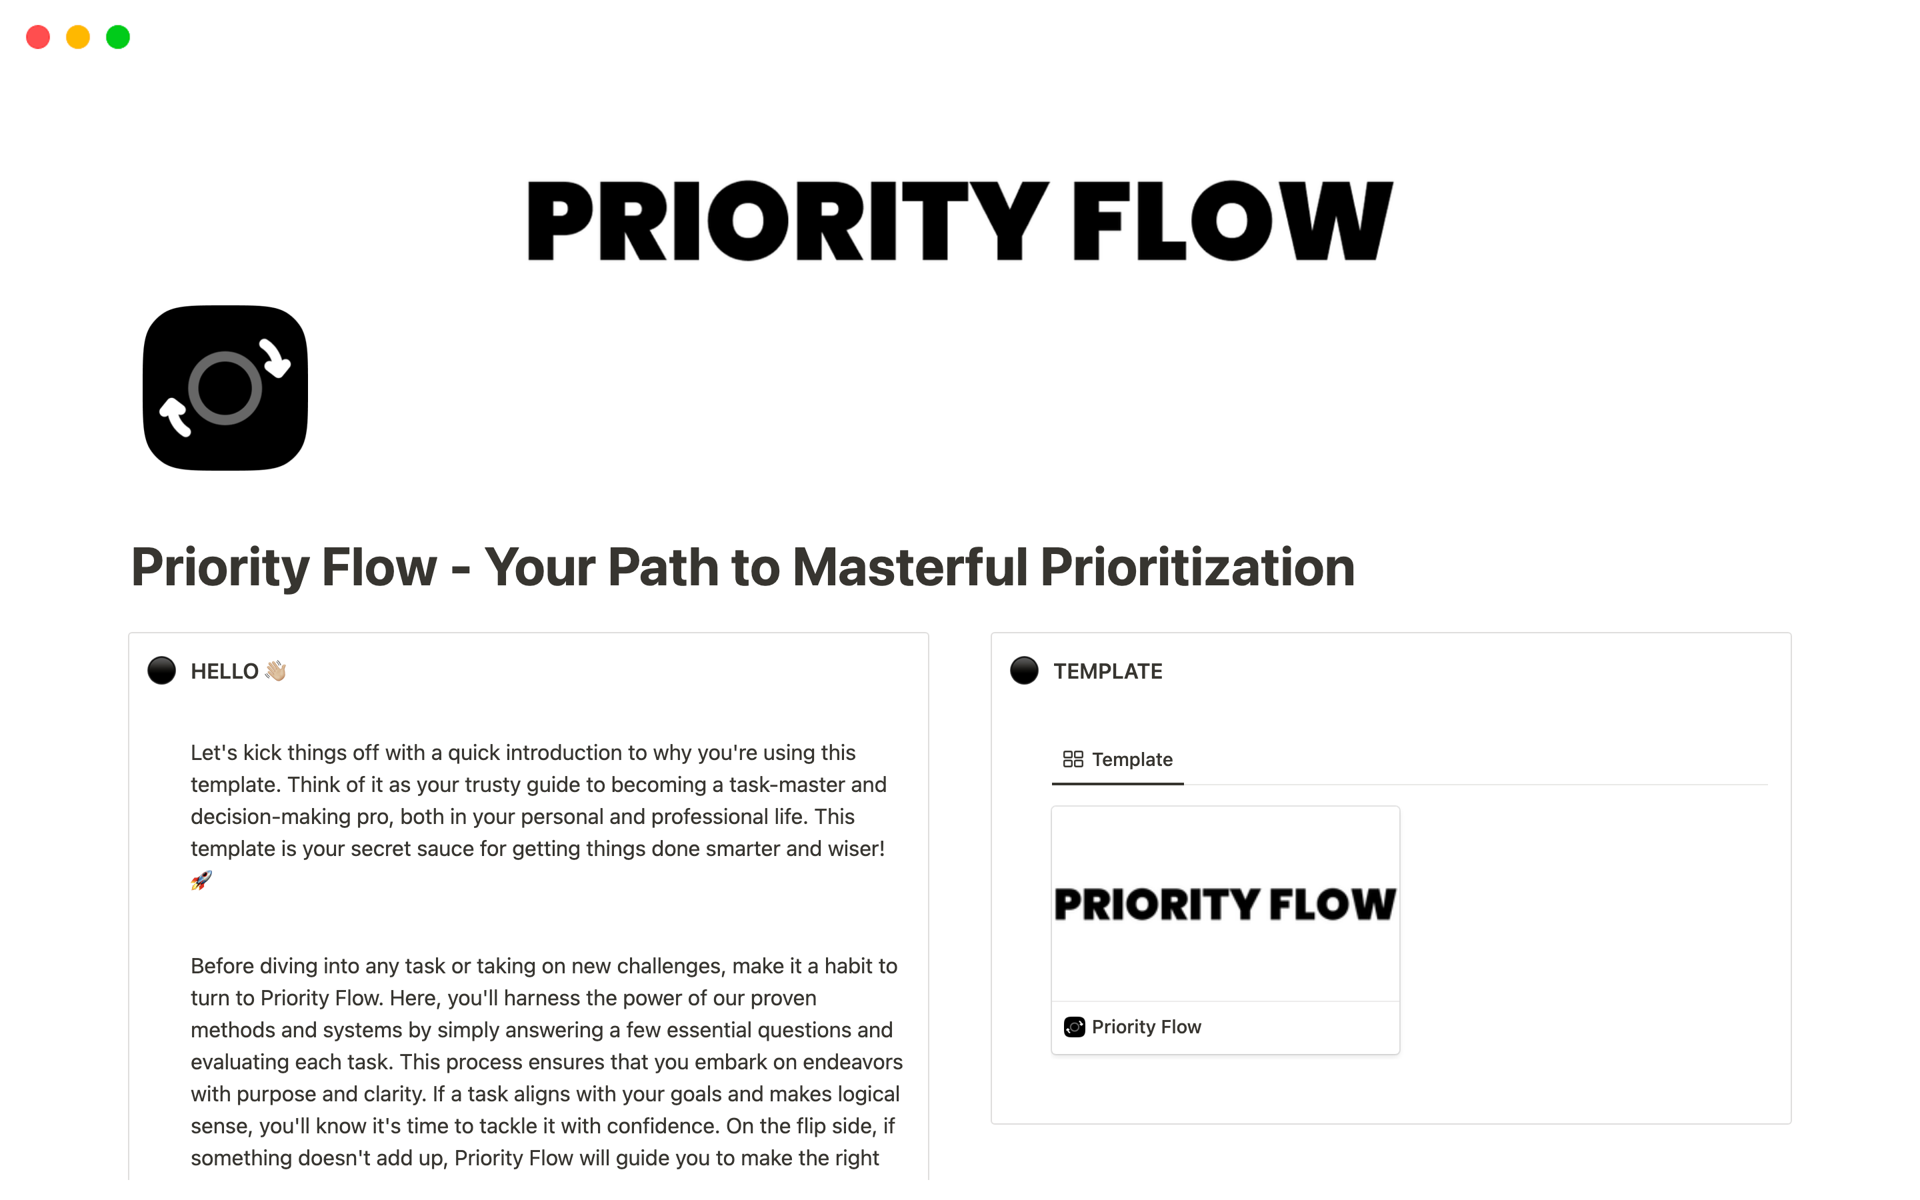 Aperçu du modèle de Priority Flow - Master Prioritization